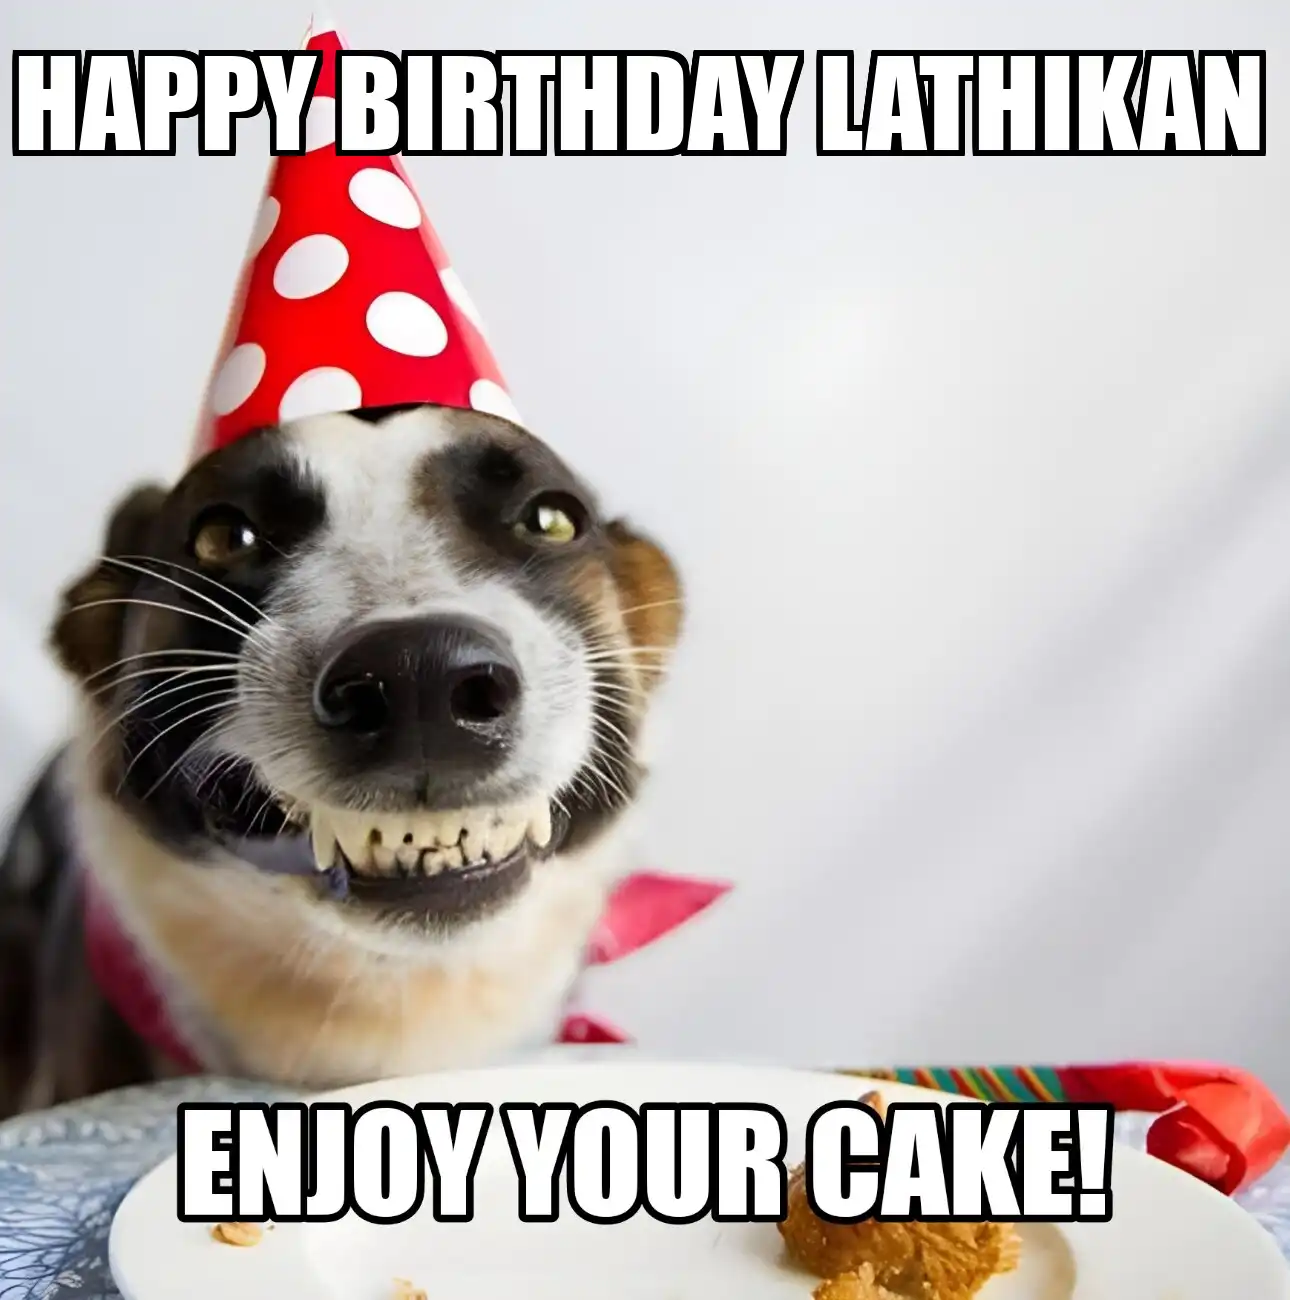 Happy Birthday Lathikan Enjoy Your Cake Dog Meme